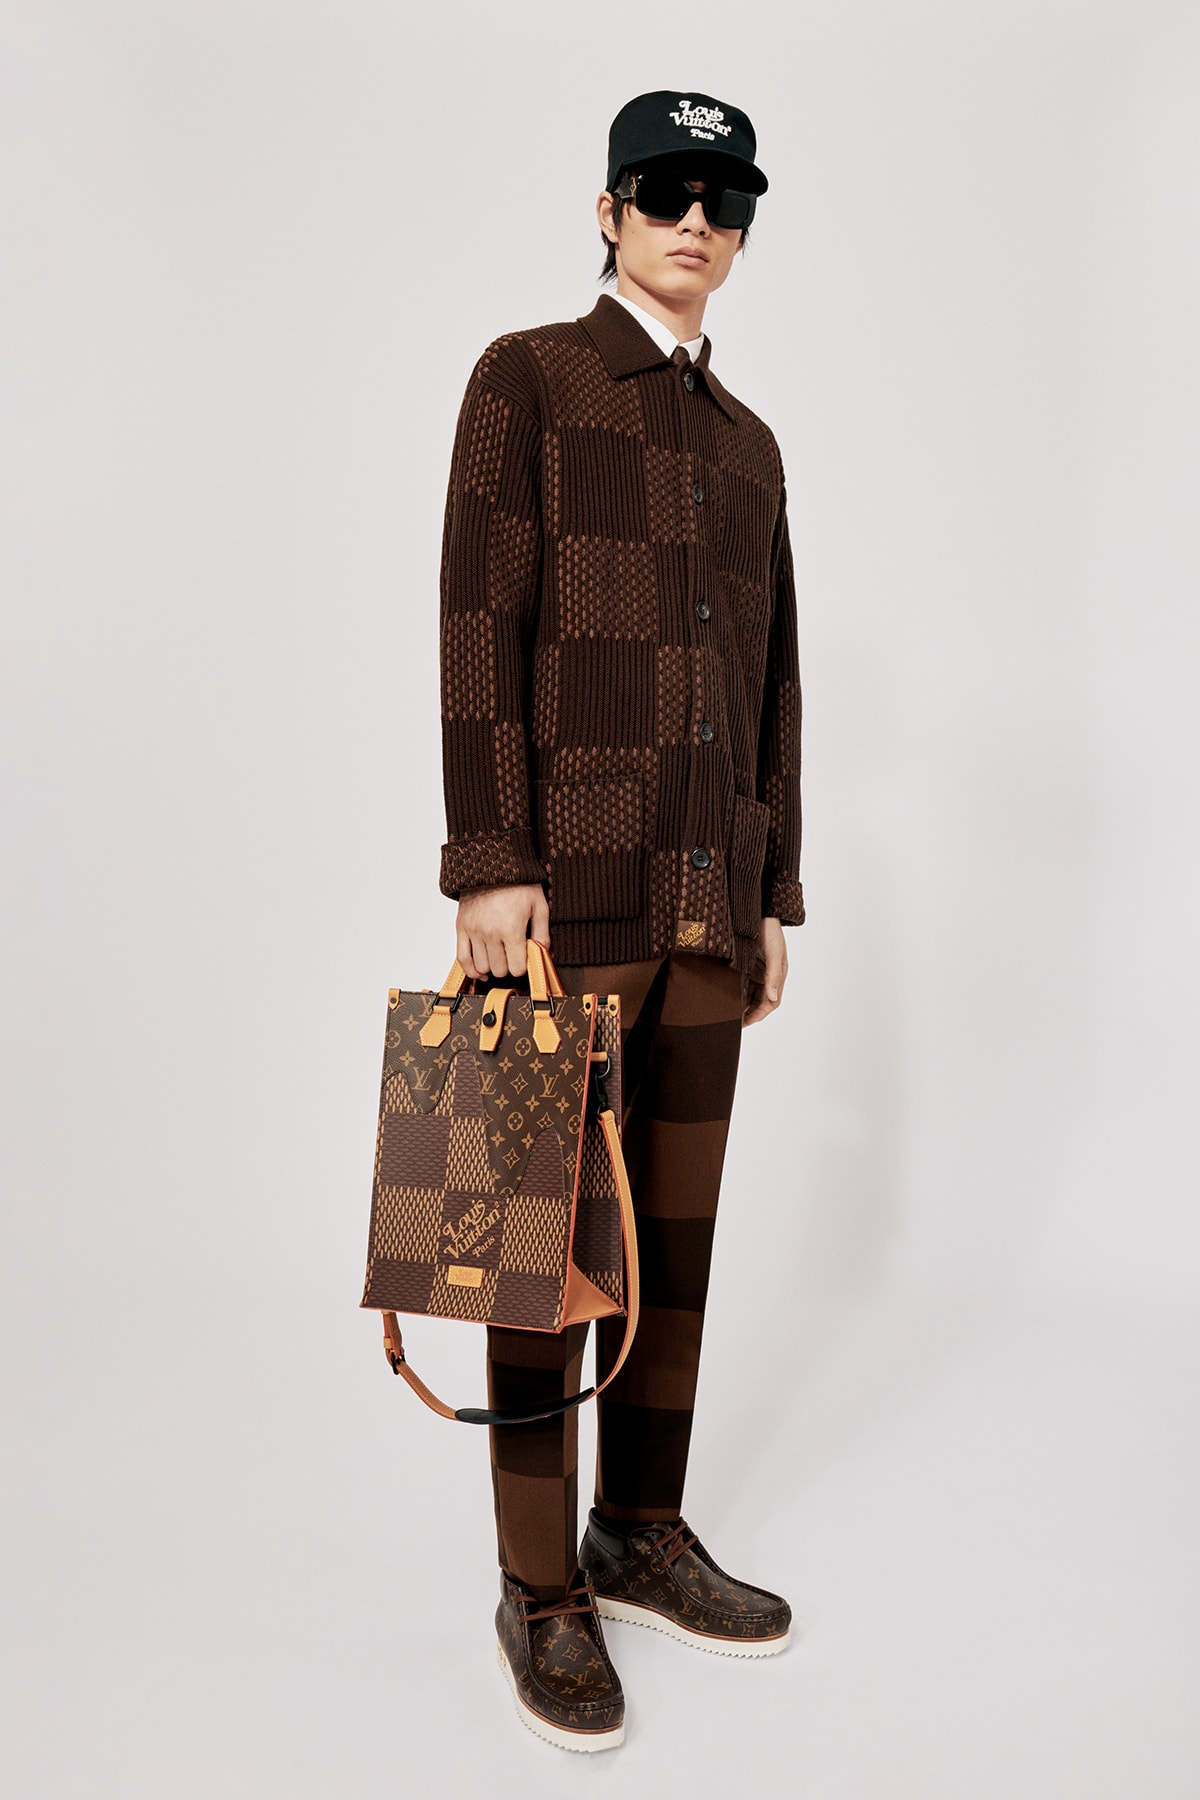 Louis Vuitton NIGO x Virgil Alboh LV2 Collection Lookbook Jacket Pants Damier Check Brown Tote Bag